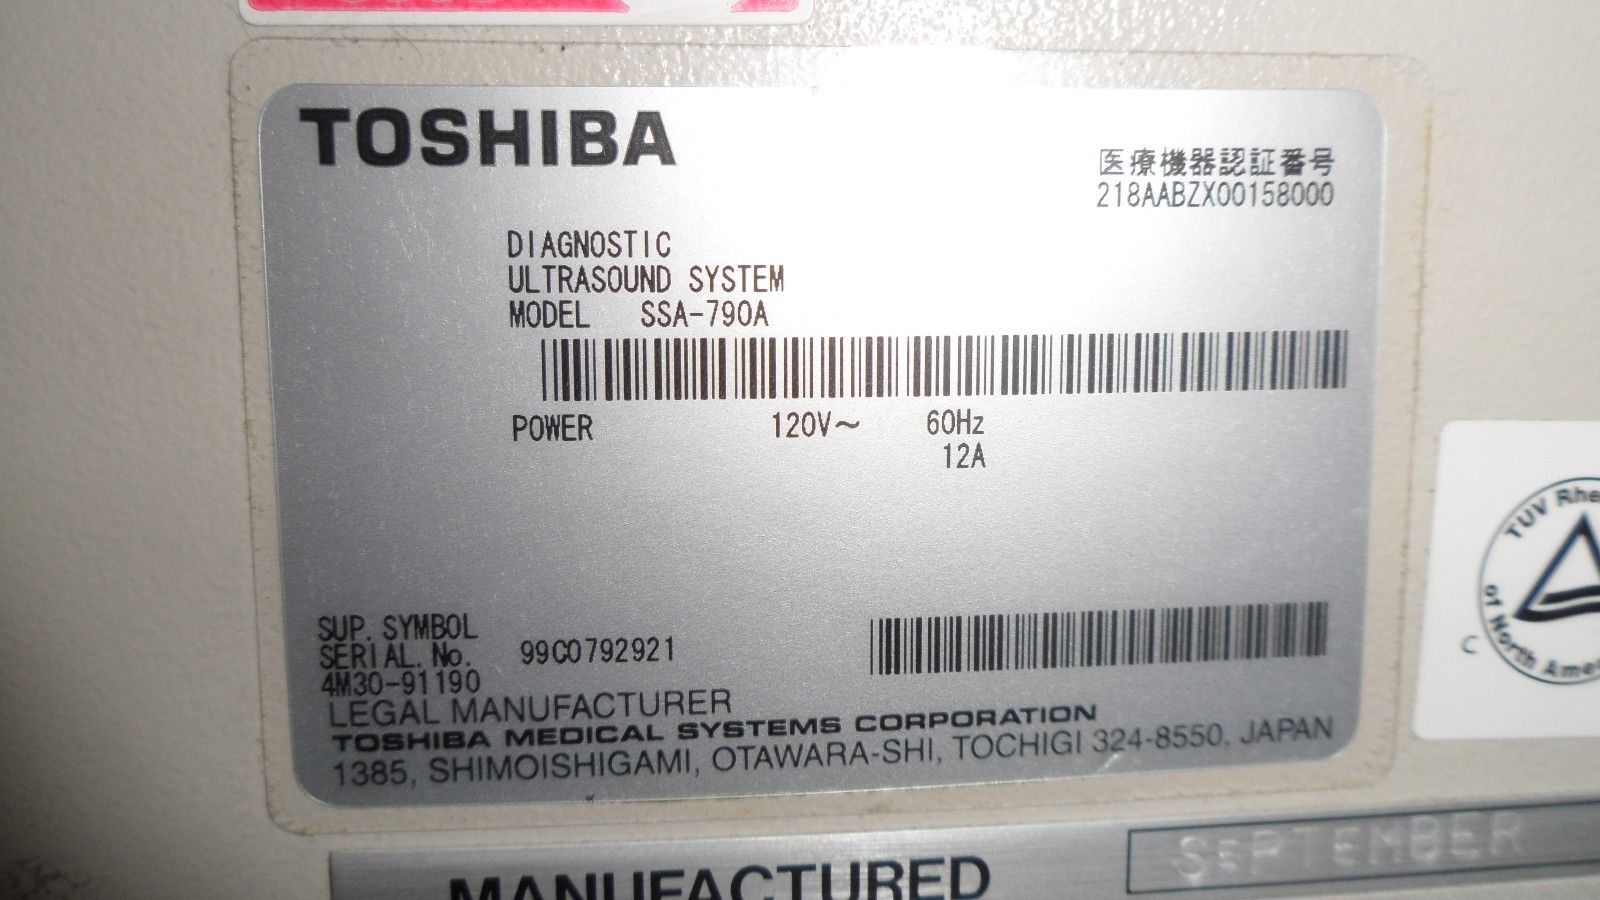 TOSHIBA APLIO XG MODLE SSA-790A ULTRASOUND MACHINE DOM 2008 DIAGNOSTIC ULTRASOUND MACHINES FOR SALE